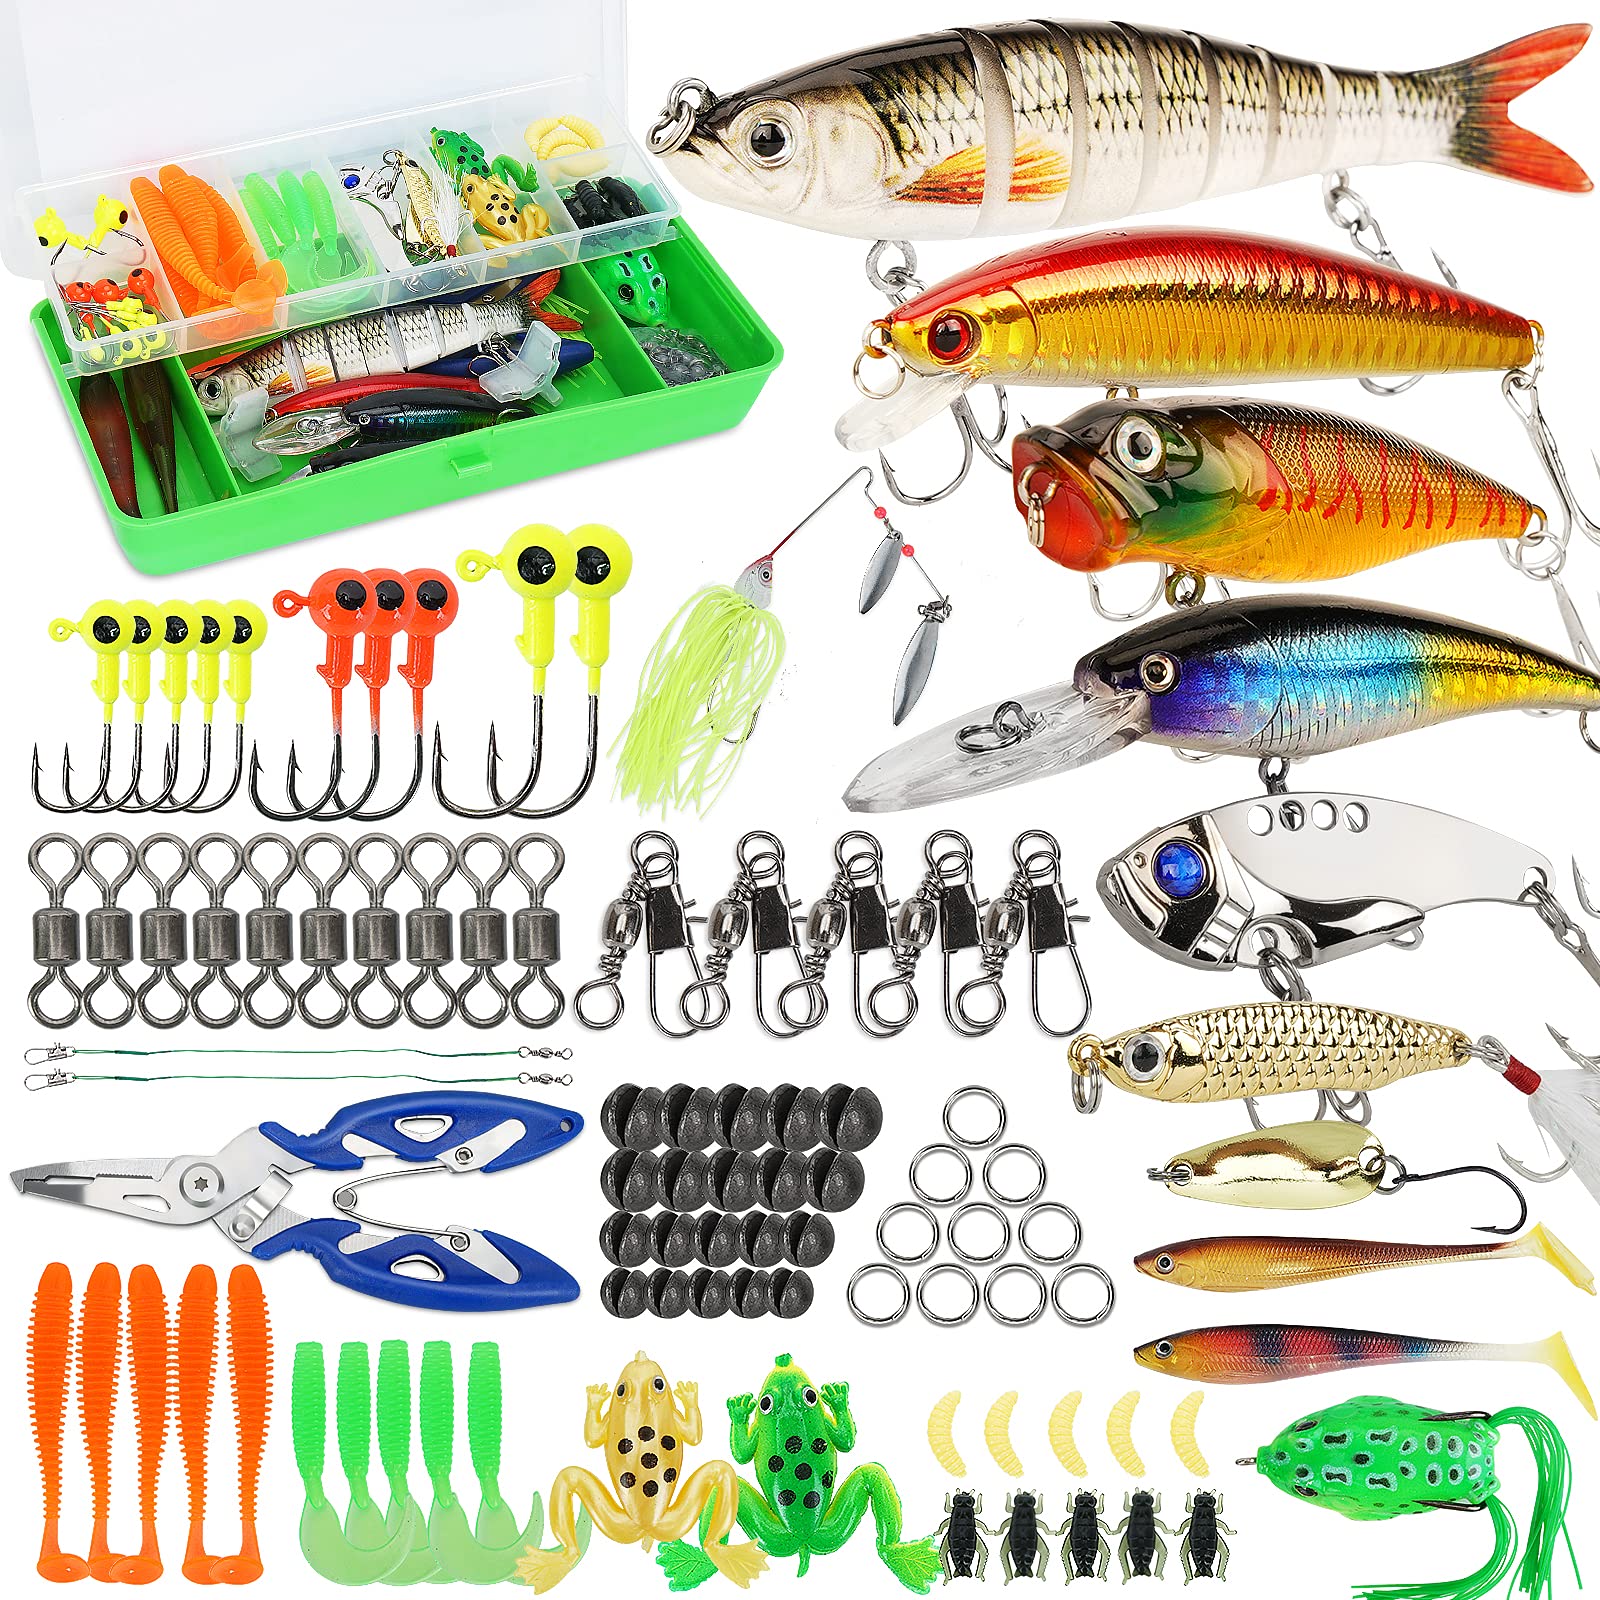 Fishing Lure Box Multi-layer Multi-functional Large Capacity Lure